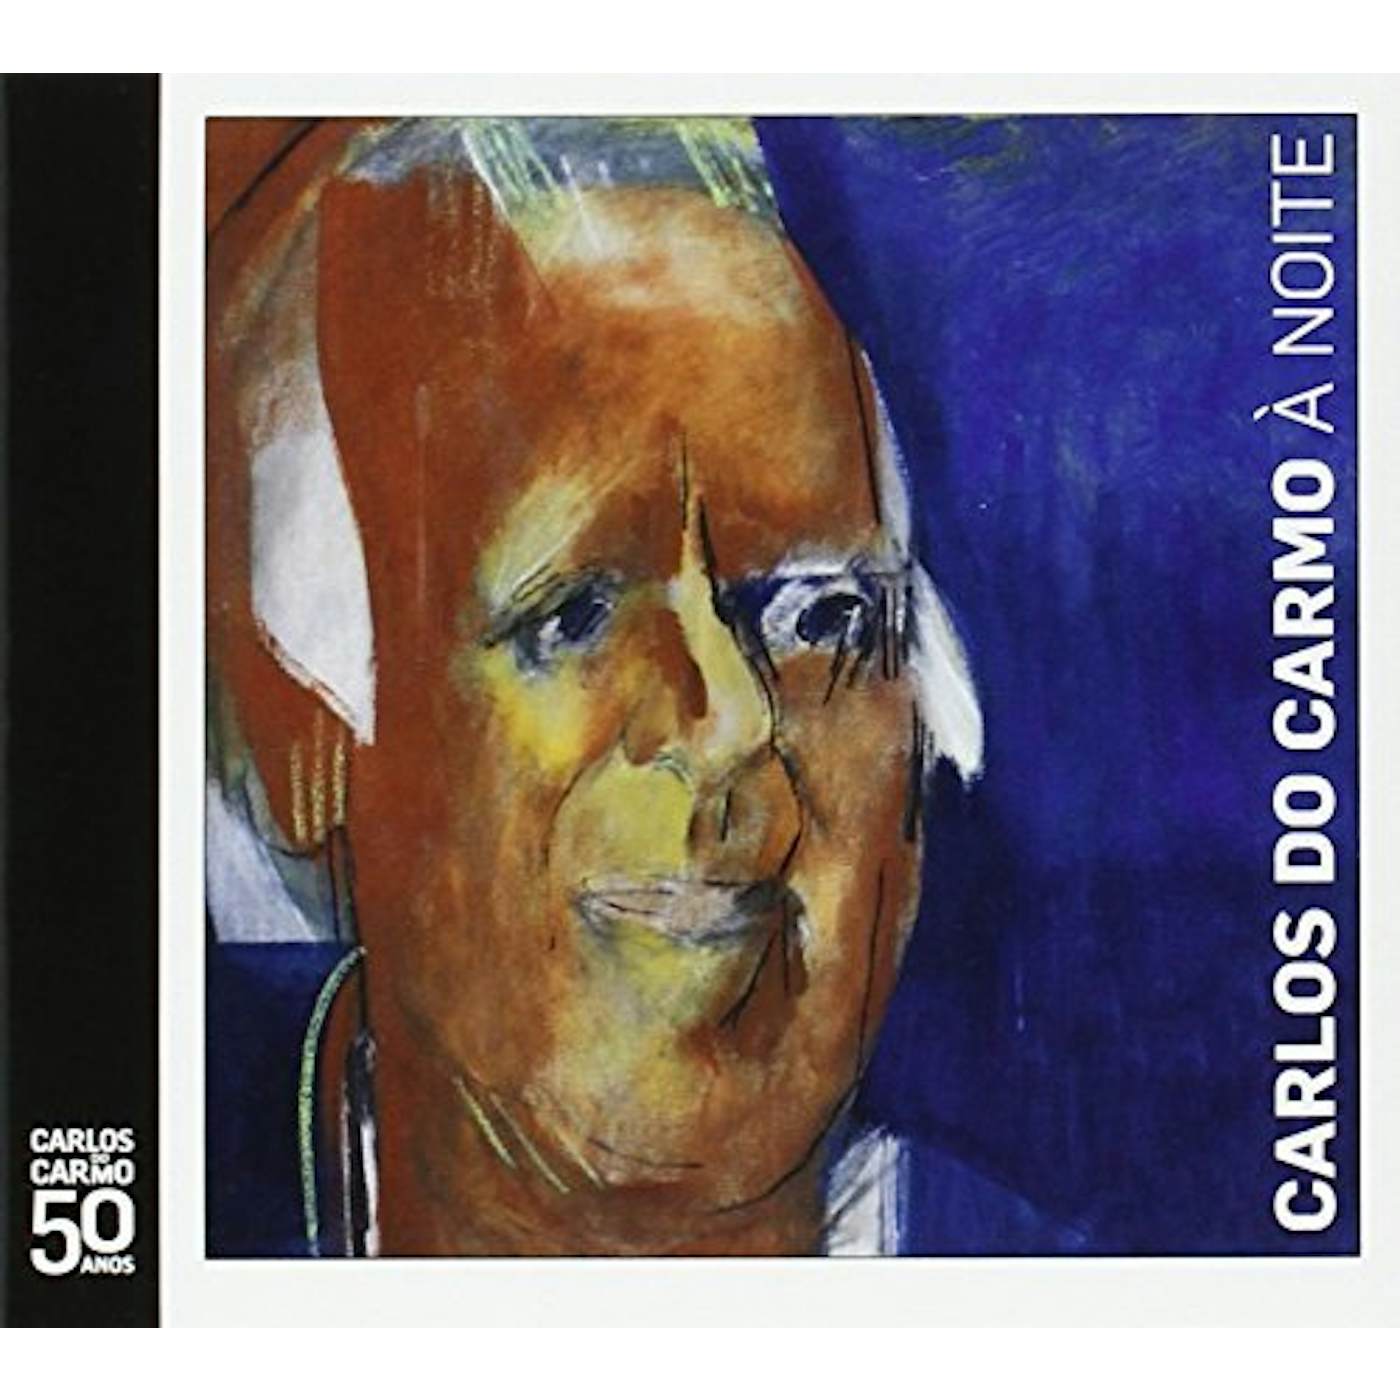 Carlos Do Carmo A NOITE CD